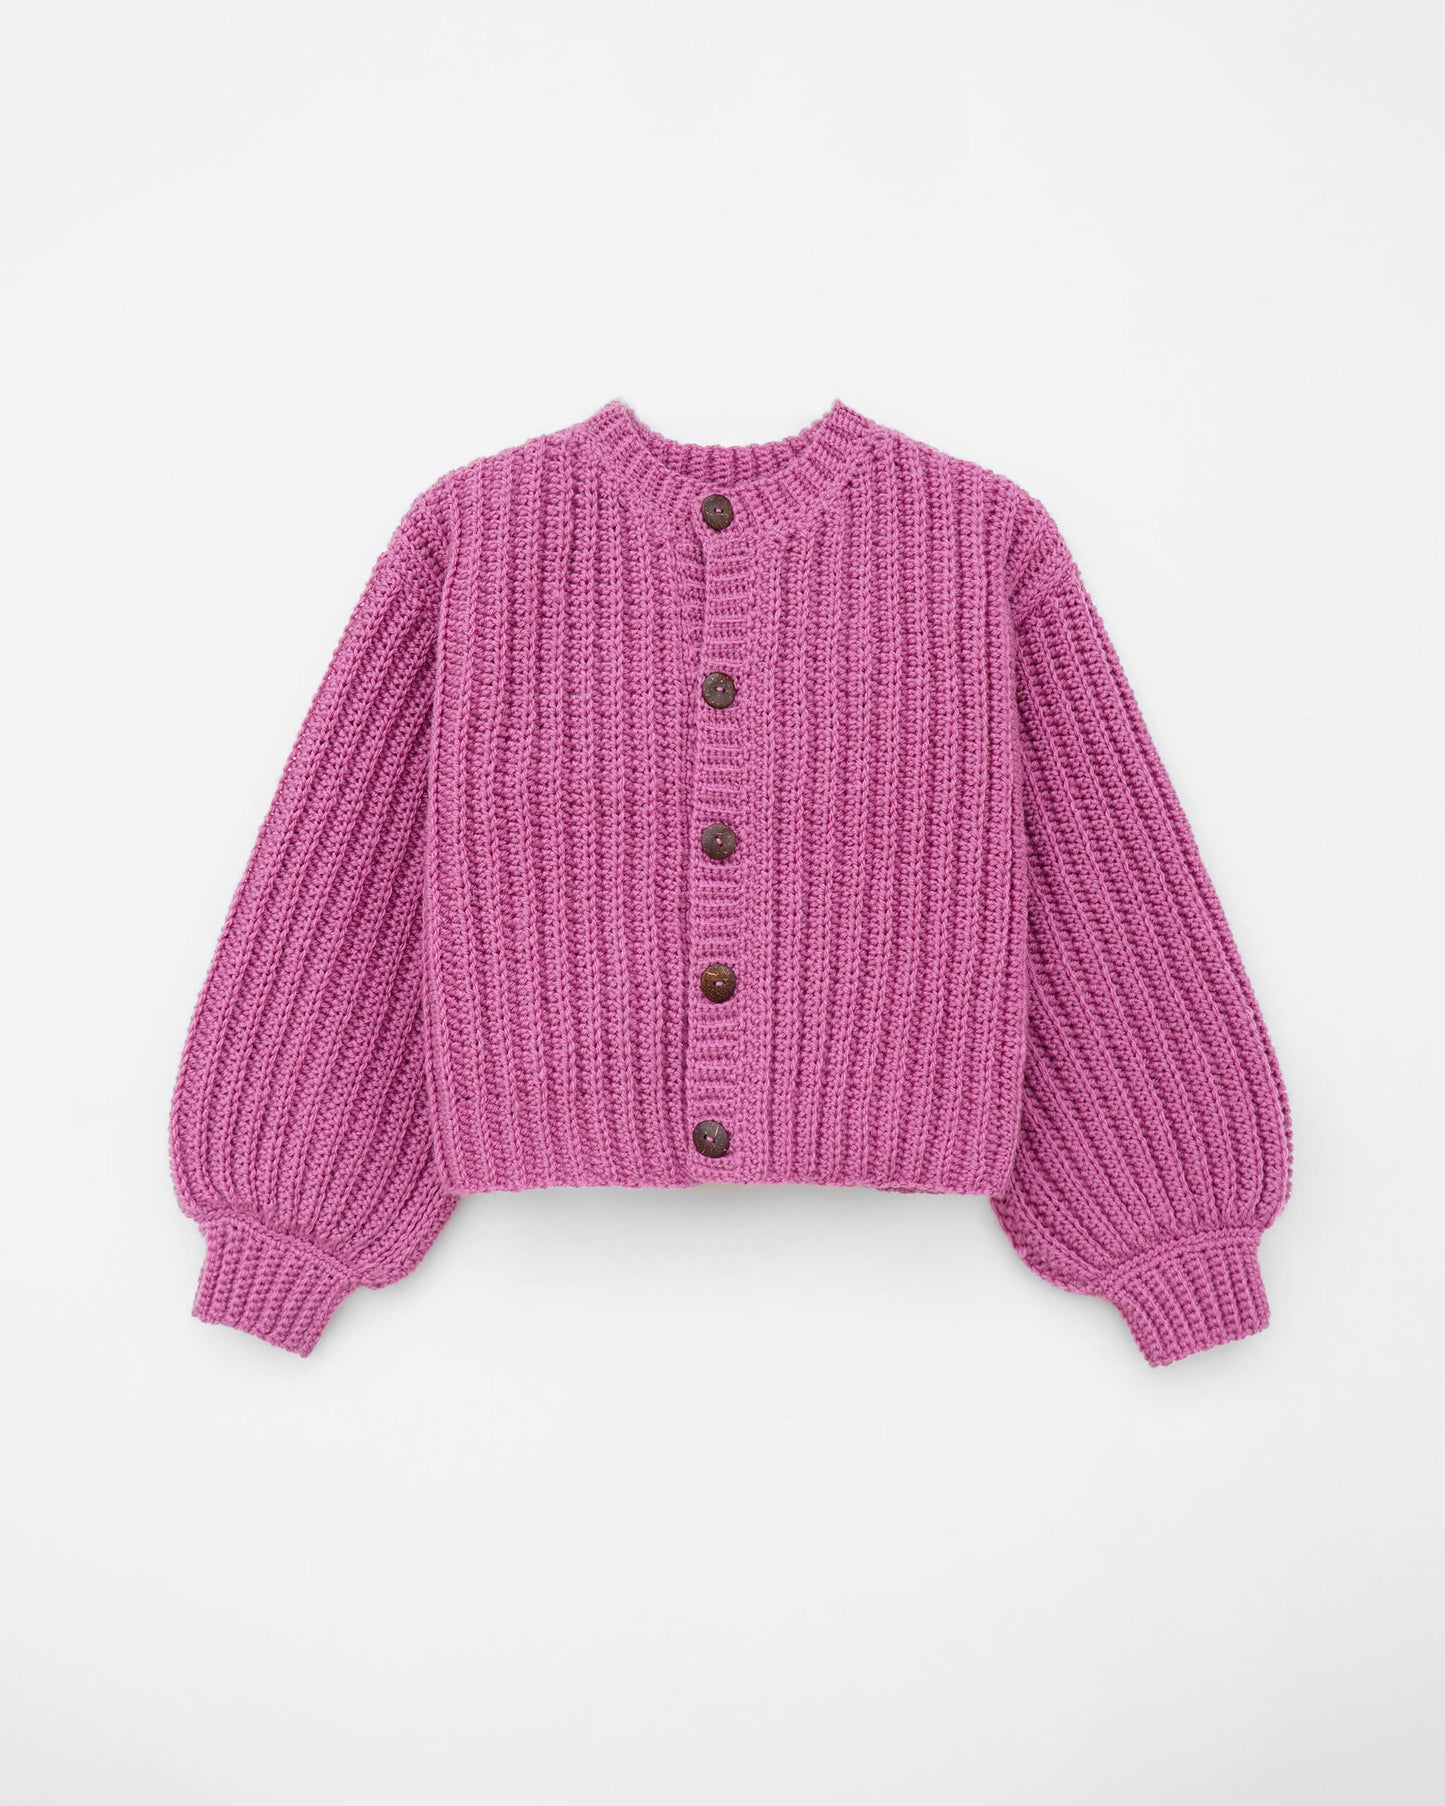 Kids' Cardigan No.4 | Crochet ribbed cardigan pattern